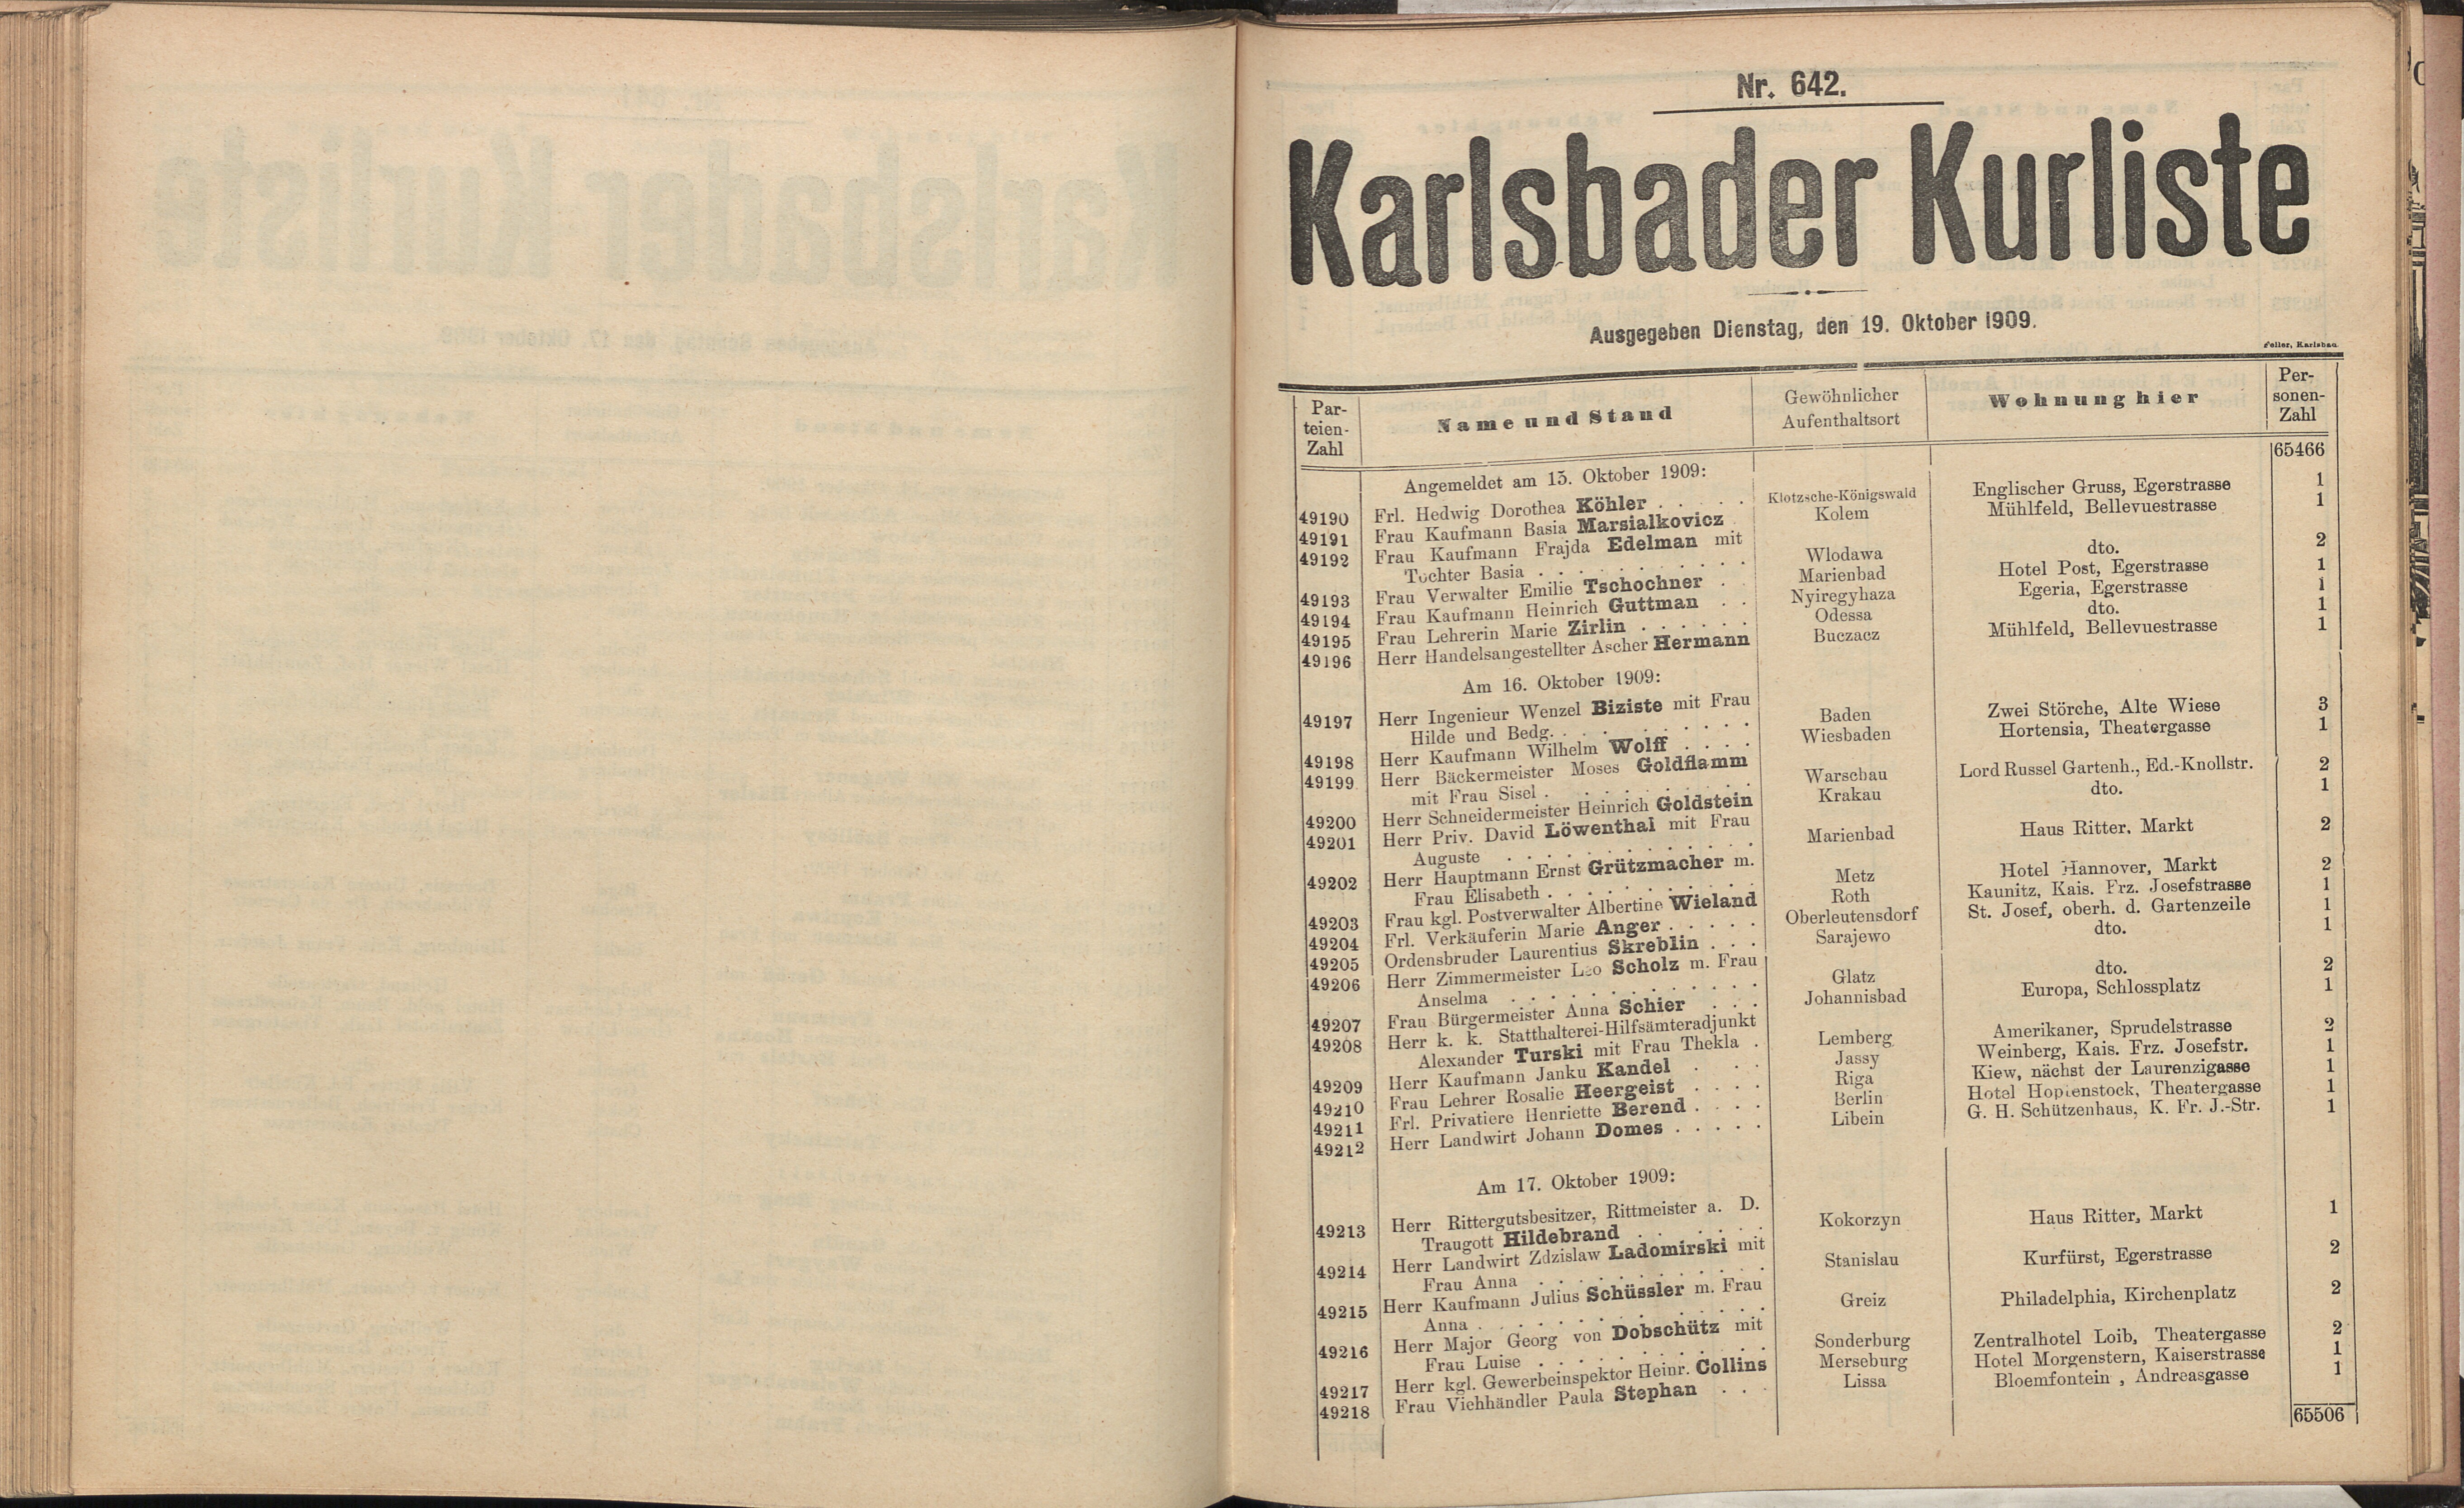 763. soap-kv_knihovna_karlsbader-kurliste-1909_7630